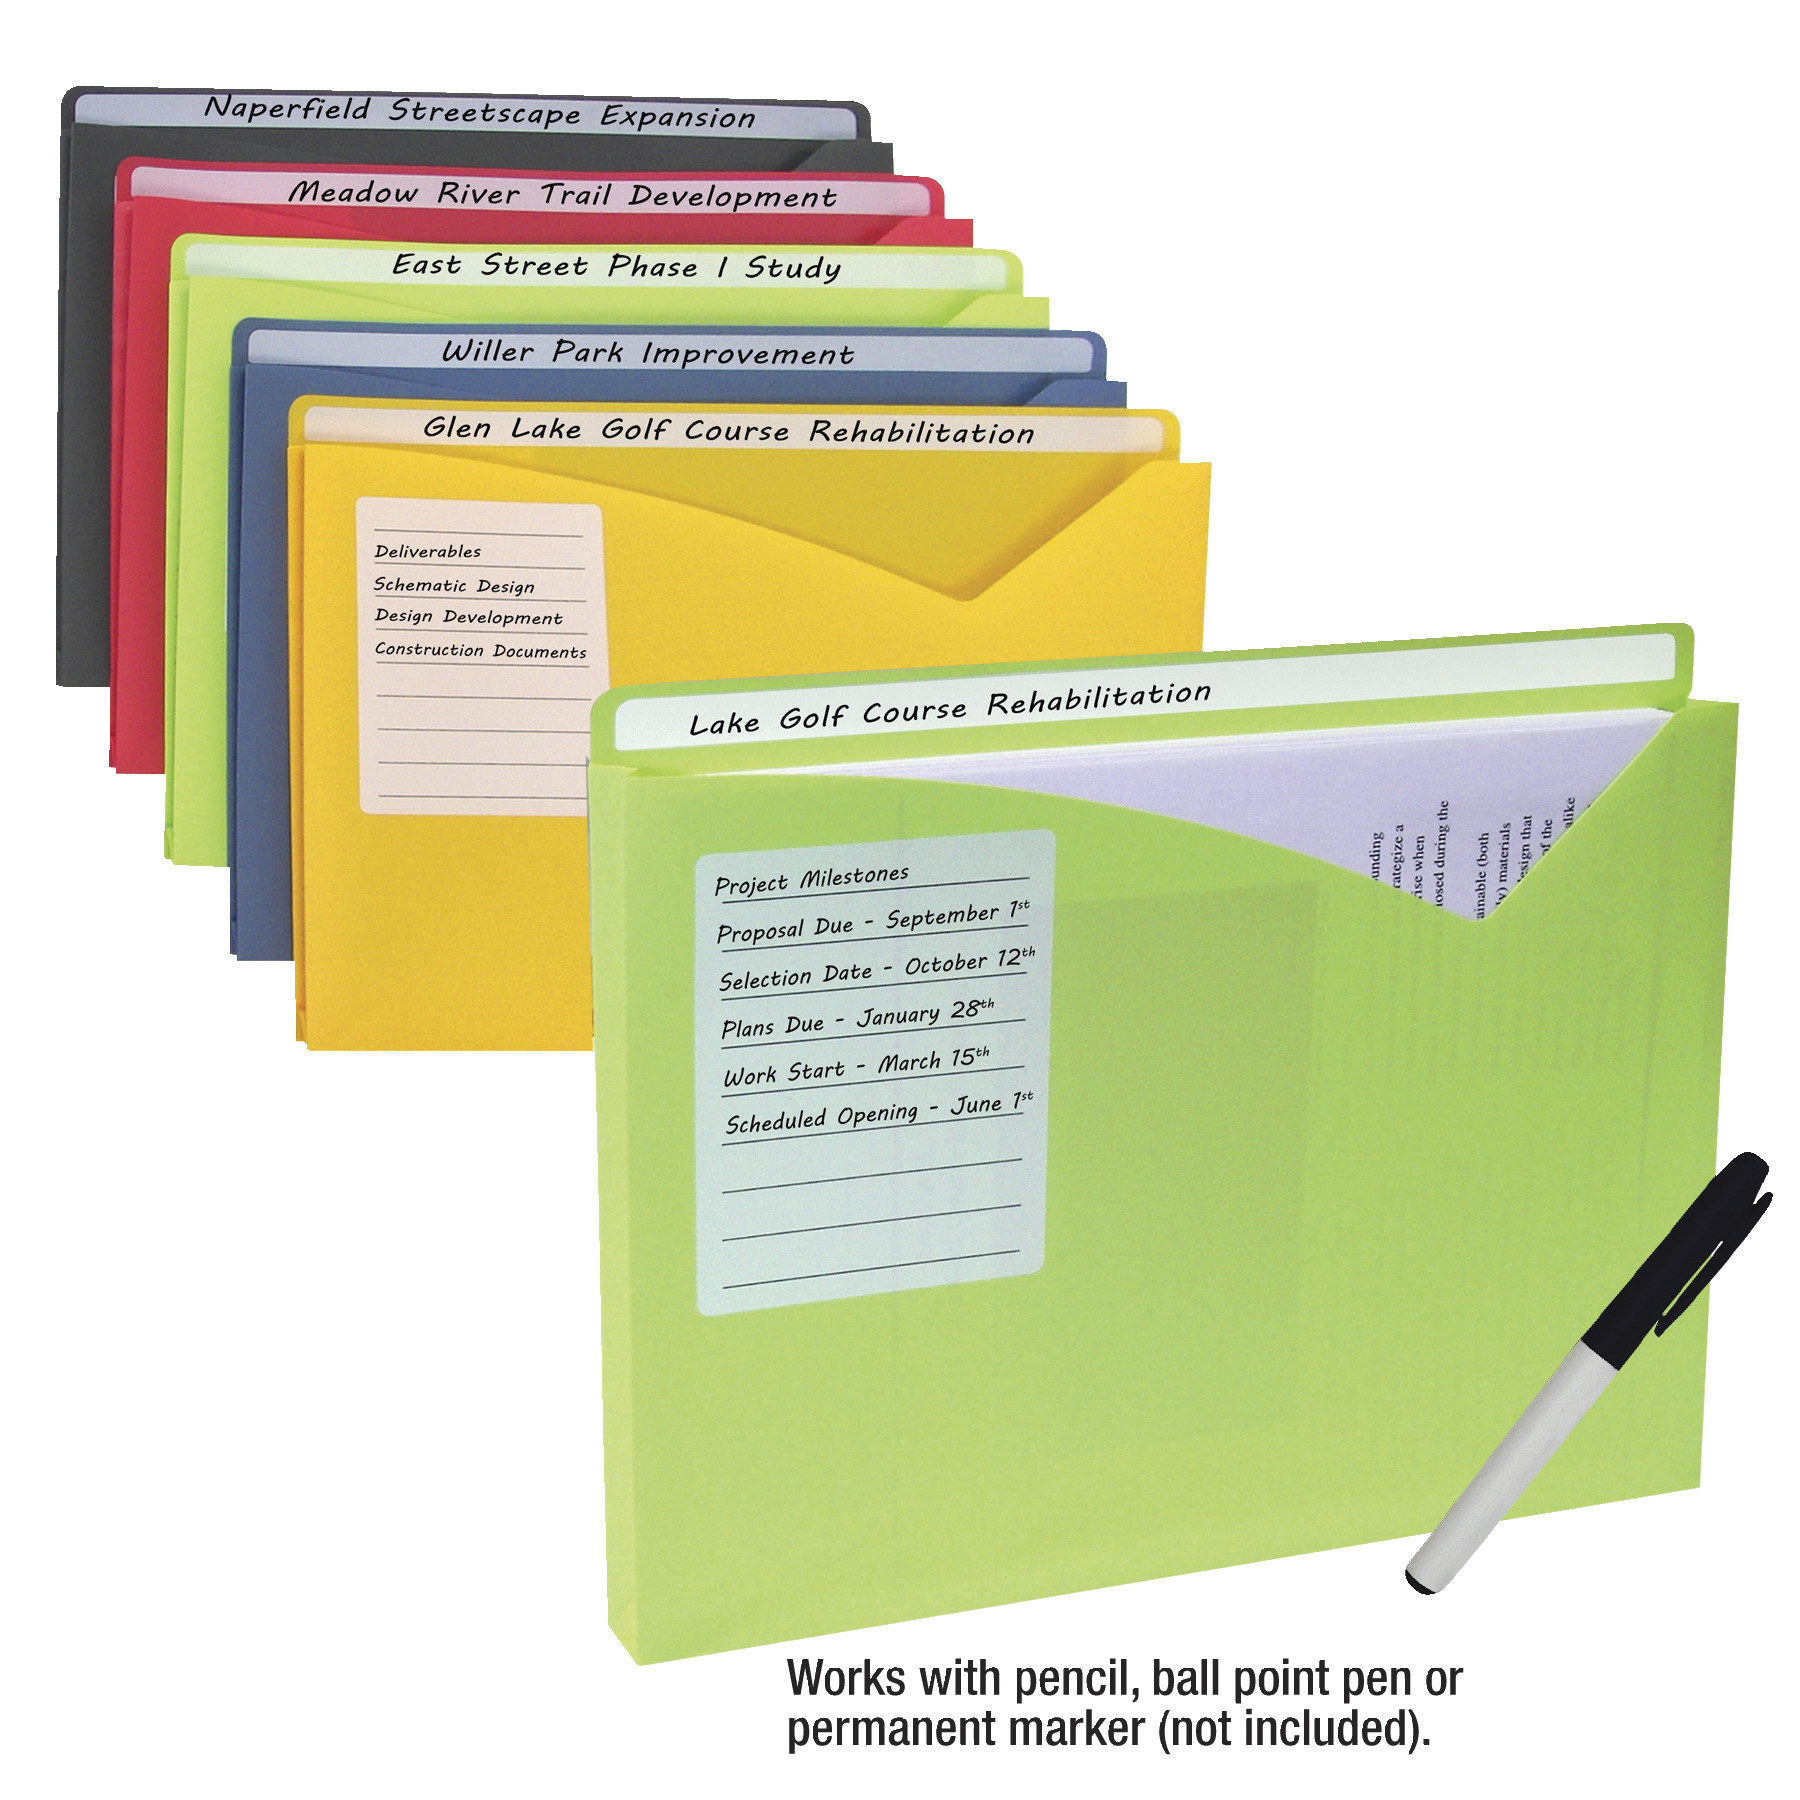 The colorful file folders